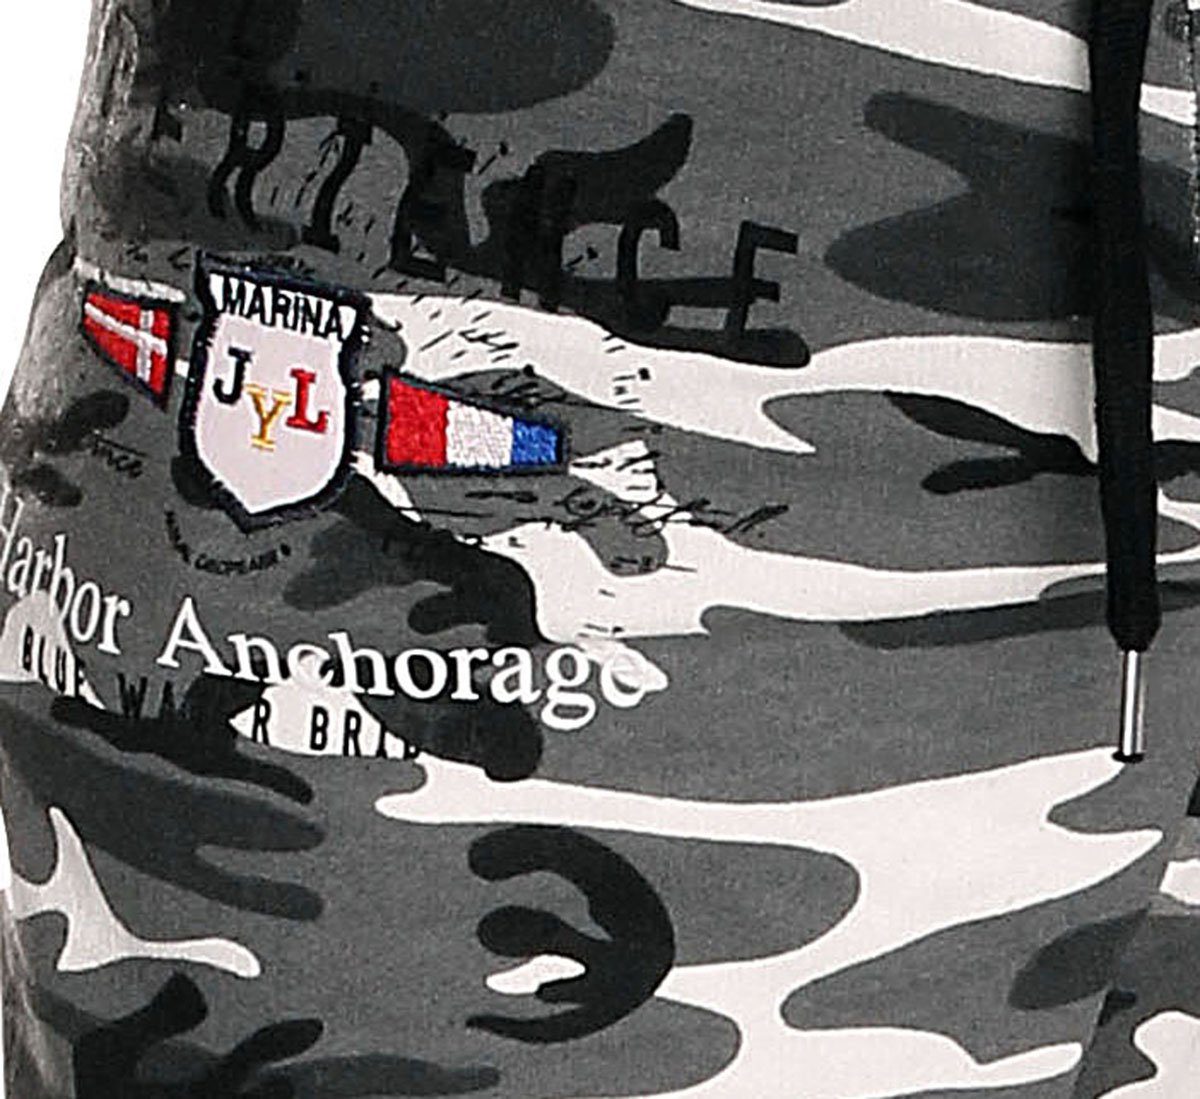 Herren Camouflage Jogginghose Hose Sport Camouflage/Hell-Schwarz Marine Jaylvis Uni Royal Trainingshose